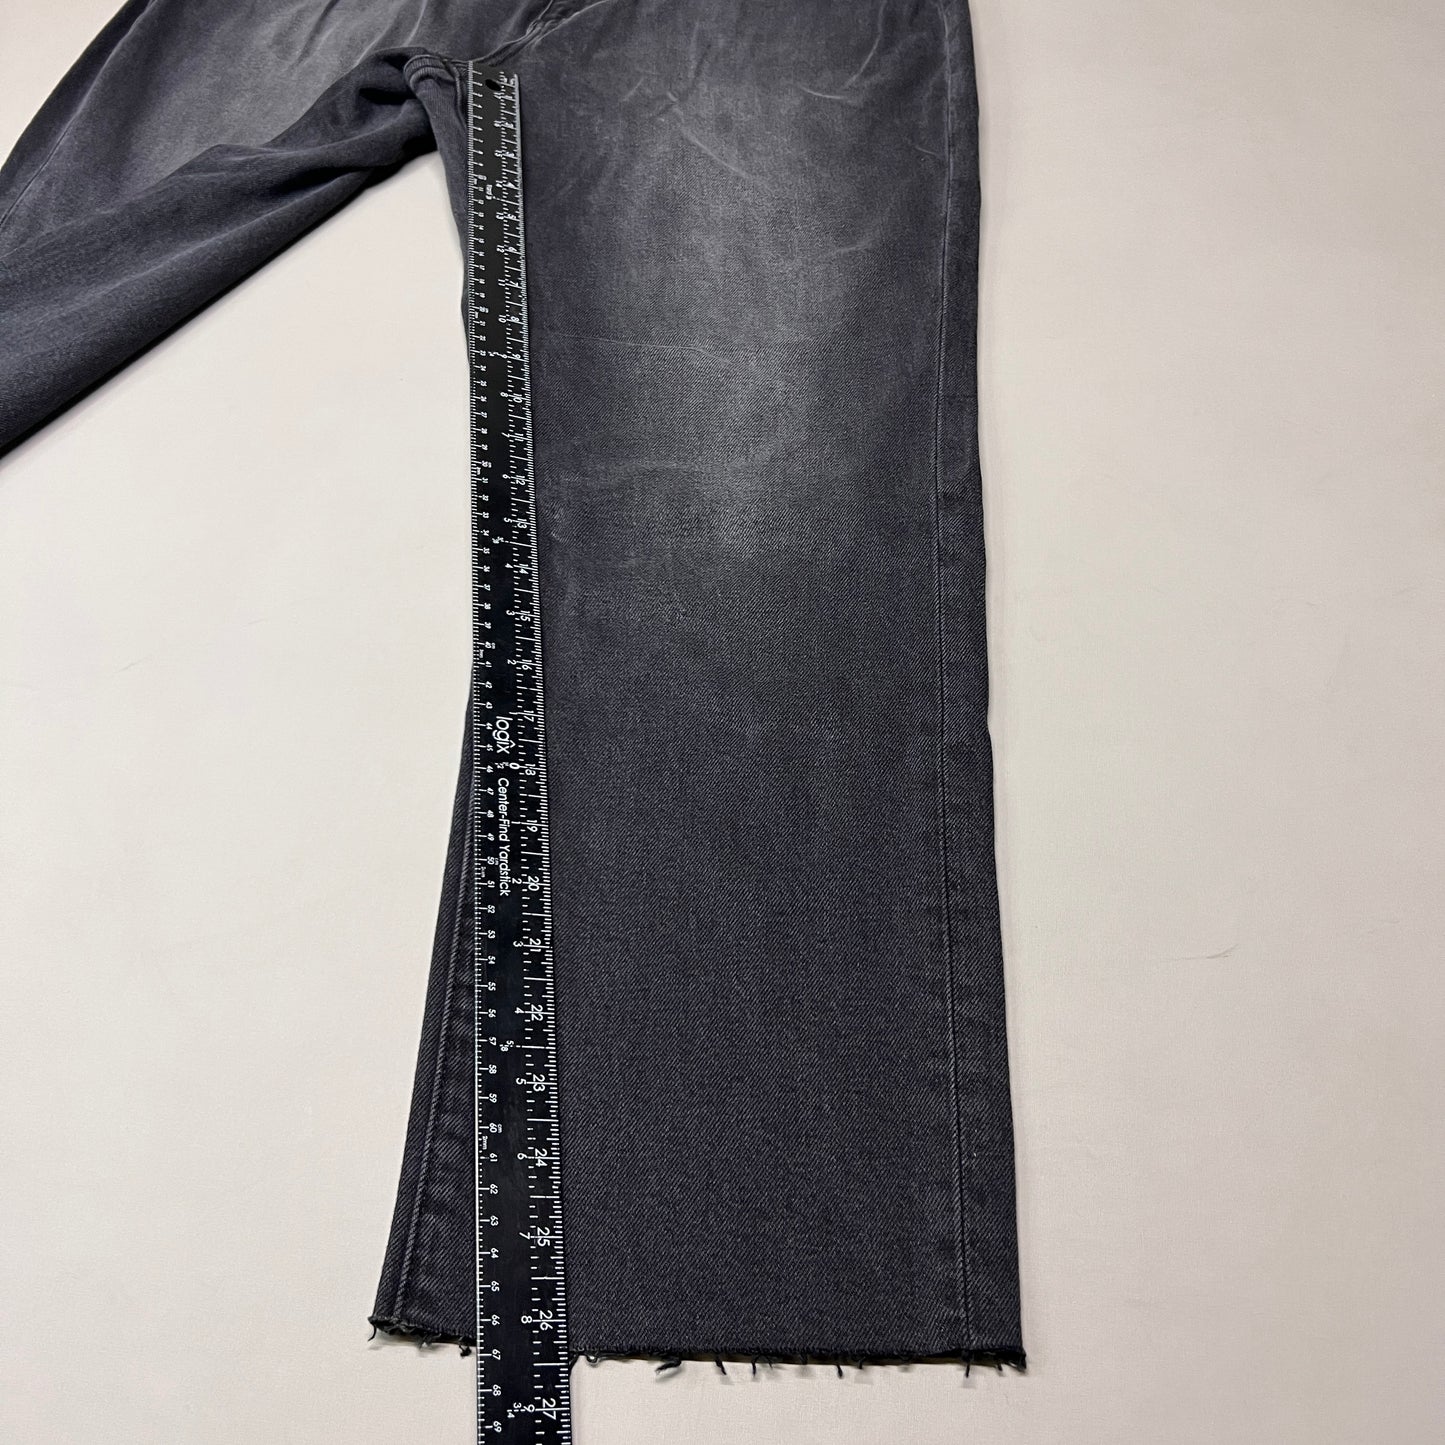 ARTICLES OF SOCIETY Kate Eleele Raw Hem Cropped Jeans Women's Sz 30 Black 4810TQB-720 (New)